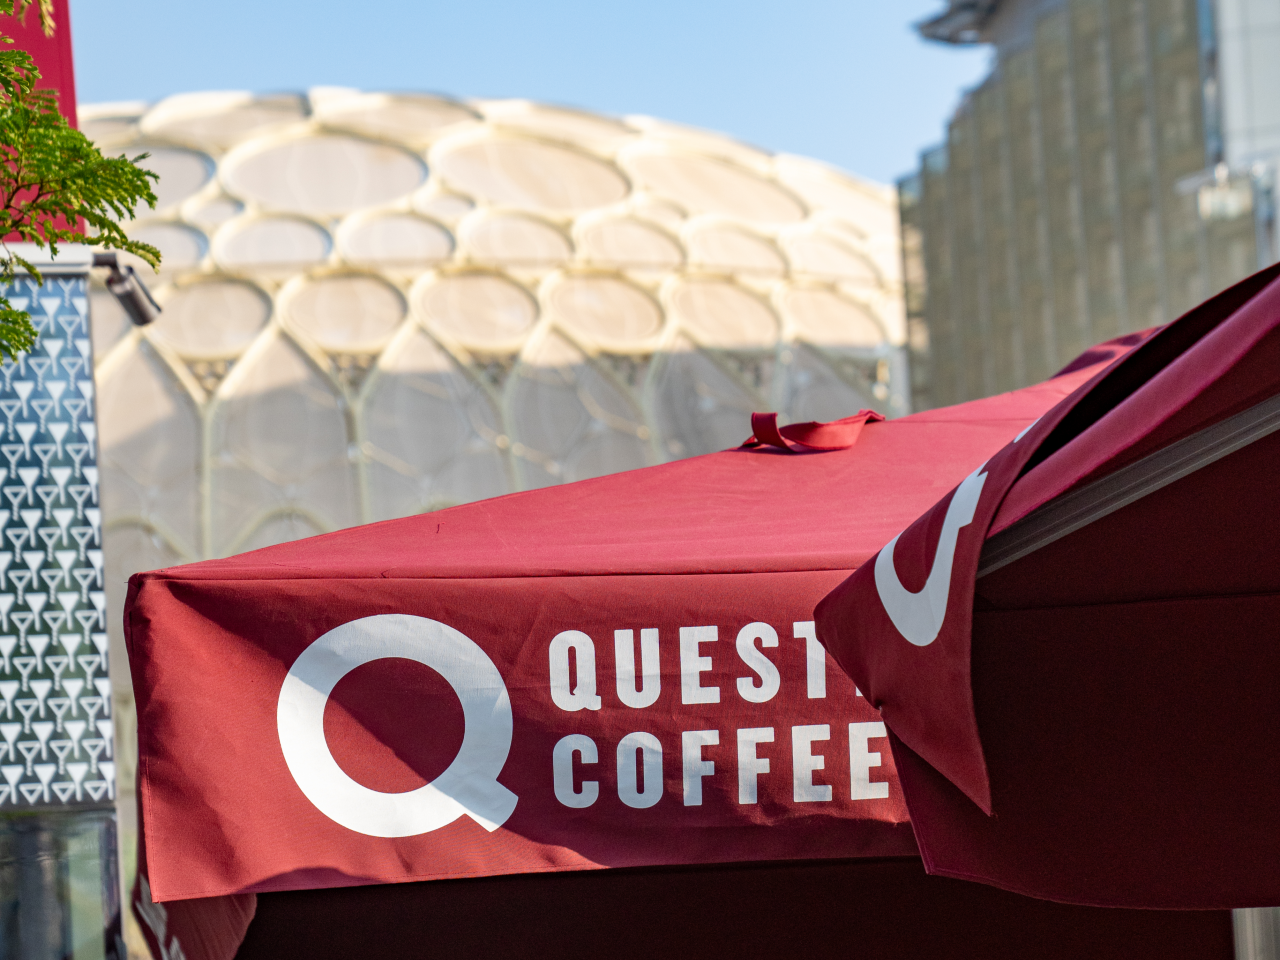 q-coffee-brand-cop-28-food-sustainability